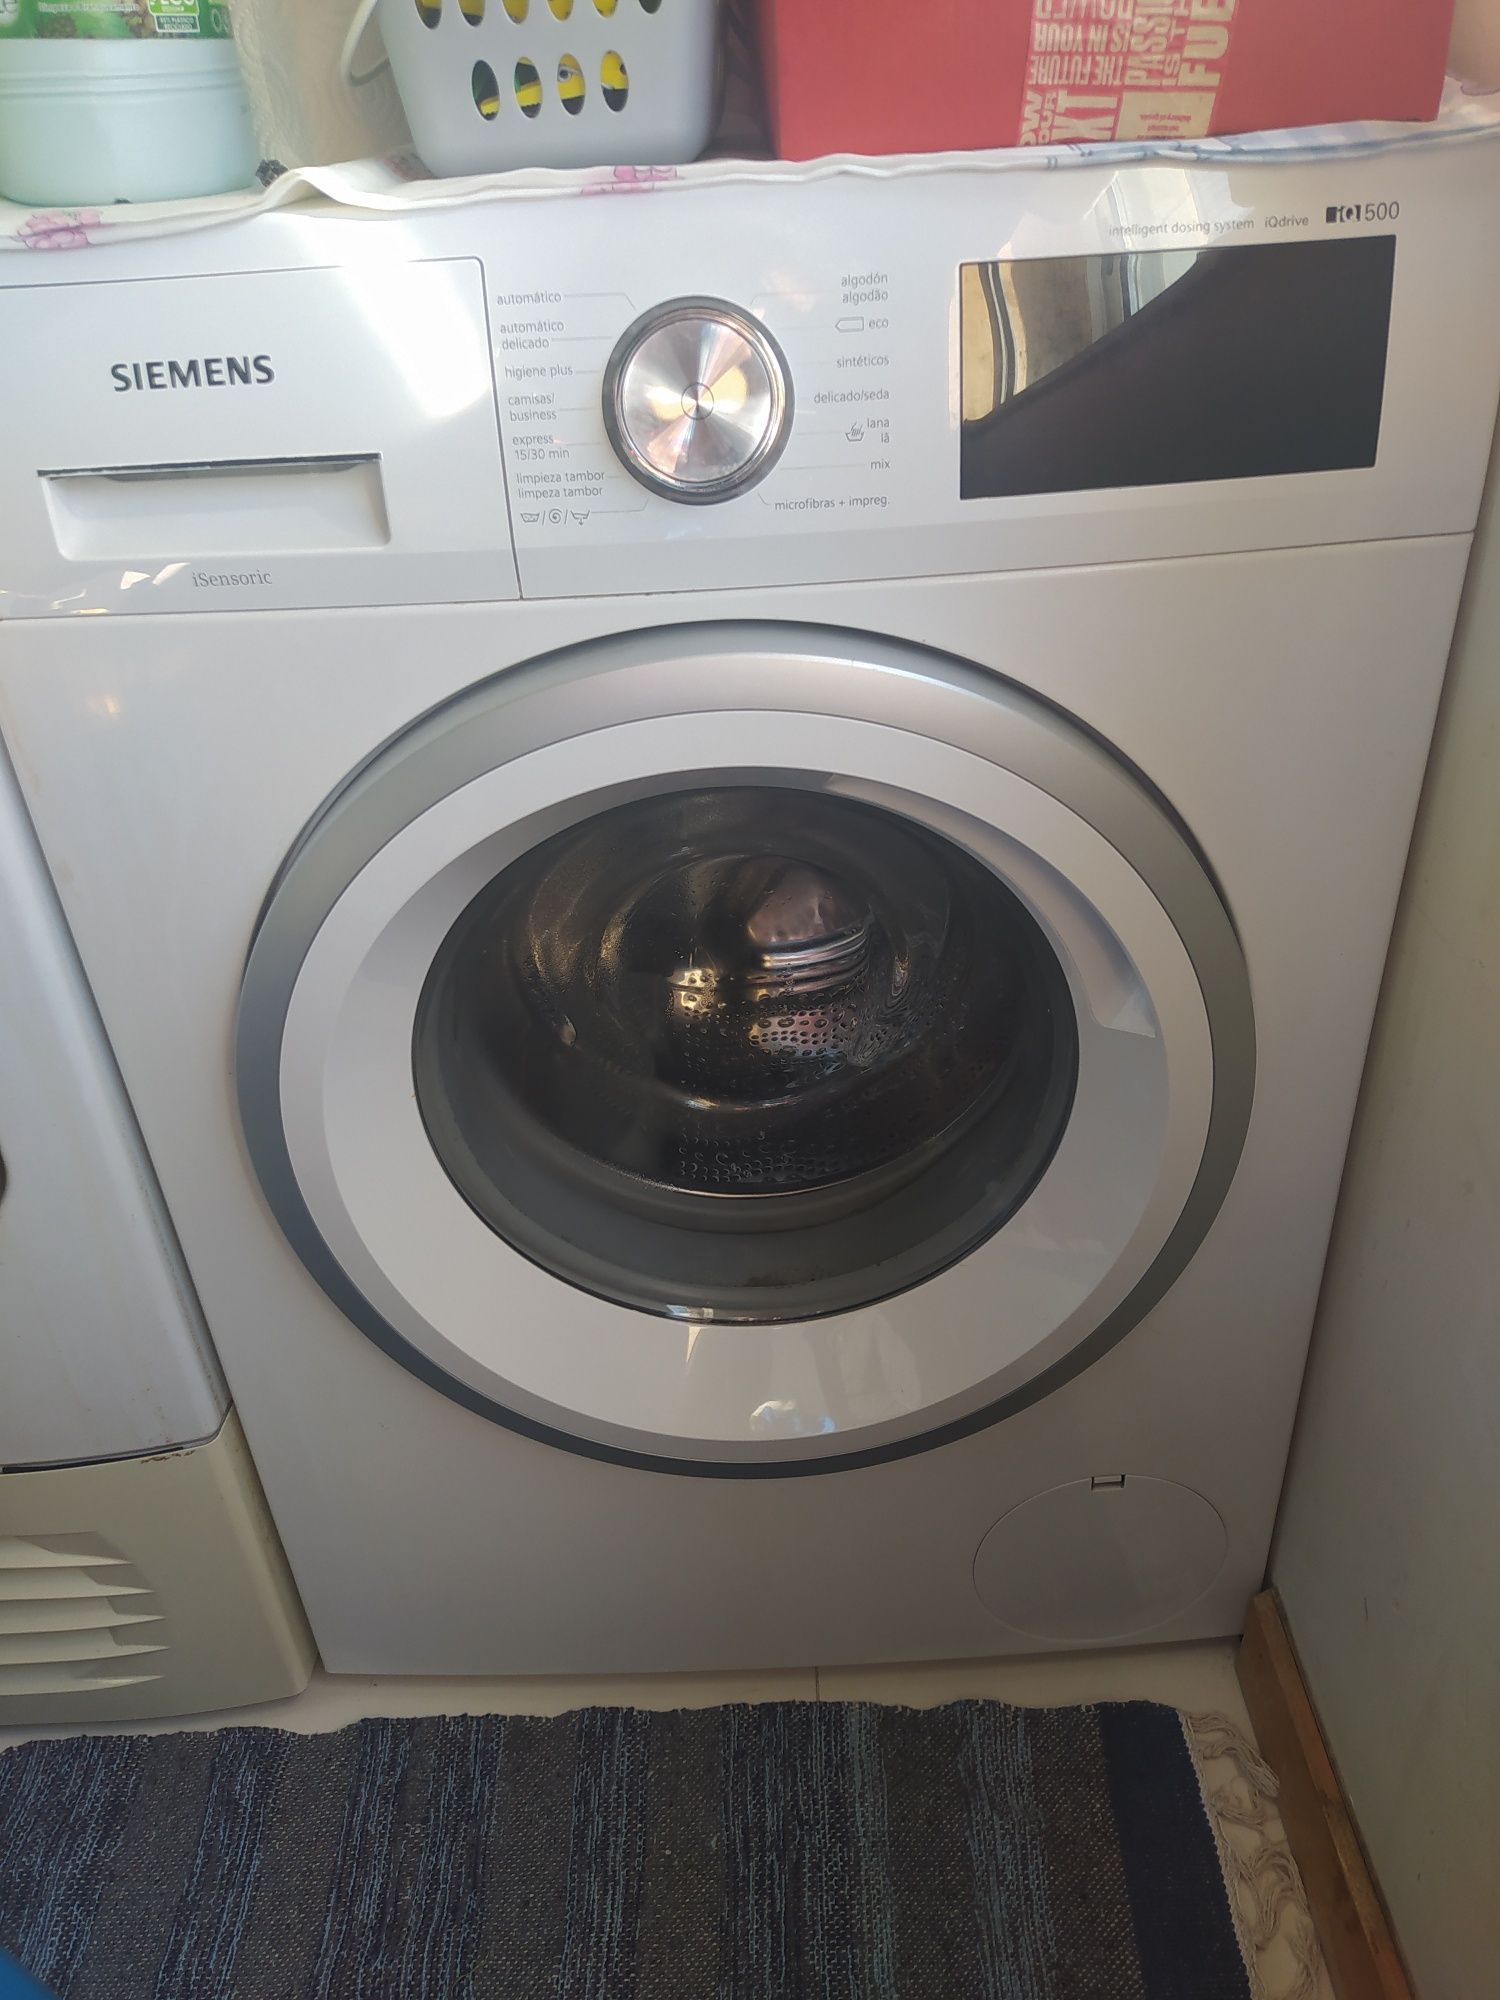 Vendo máquina lavar roupa